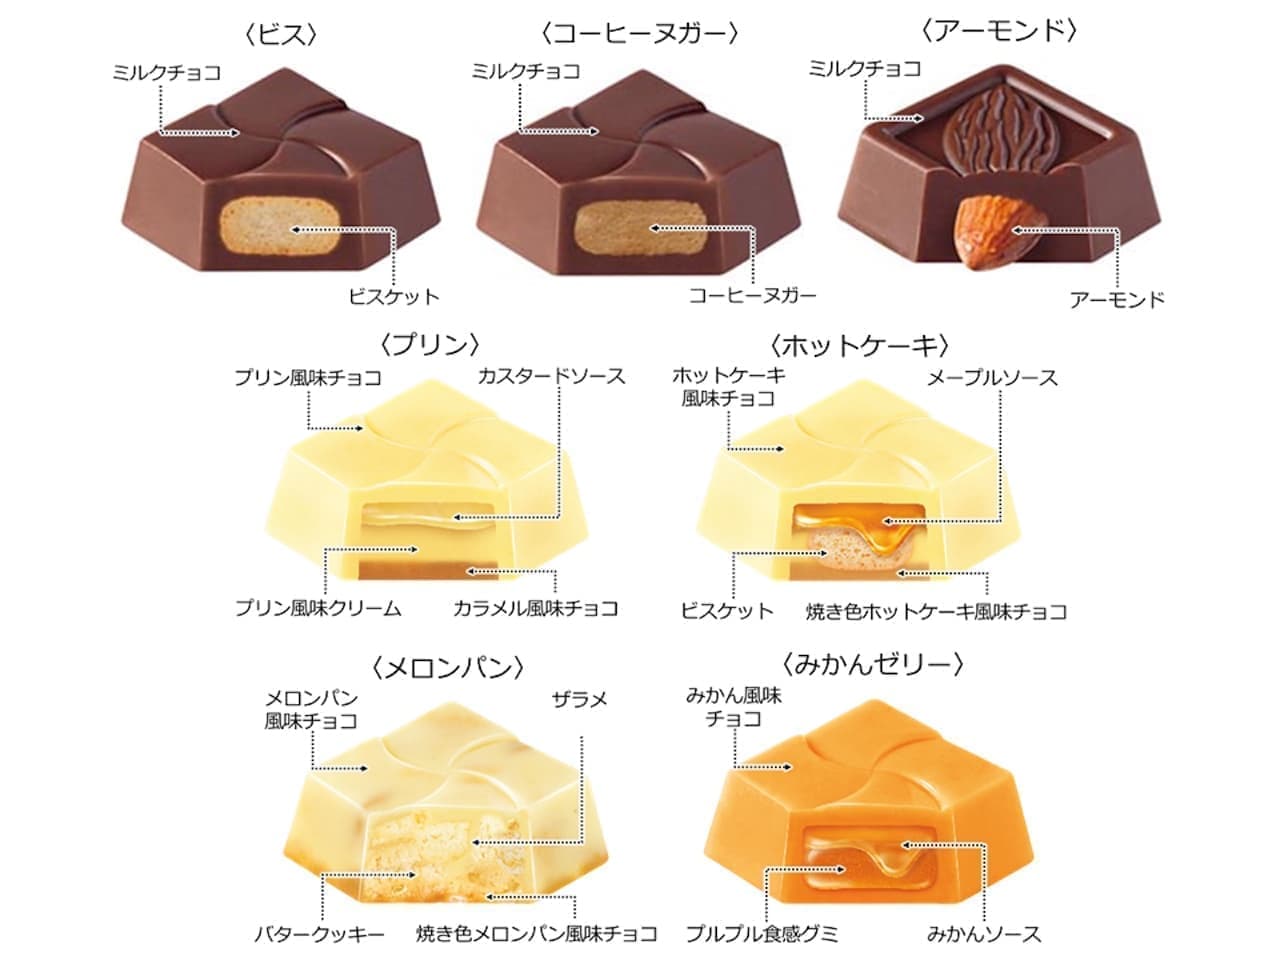 Tyrol Chocolate "Chiikawa BOX" from Famima.